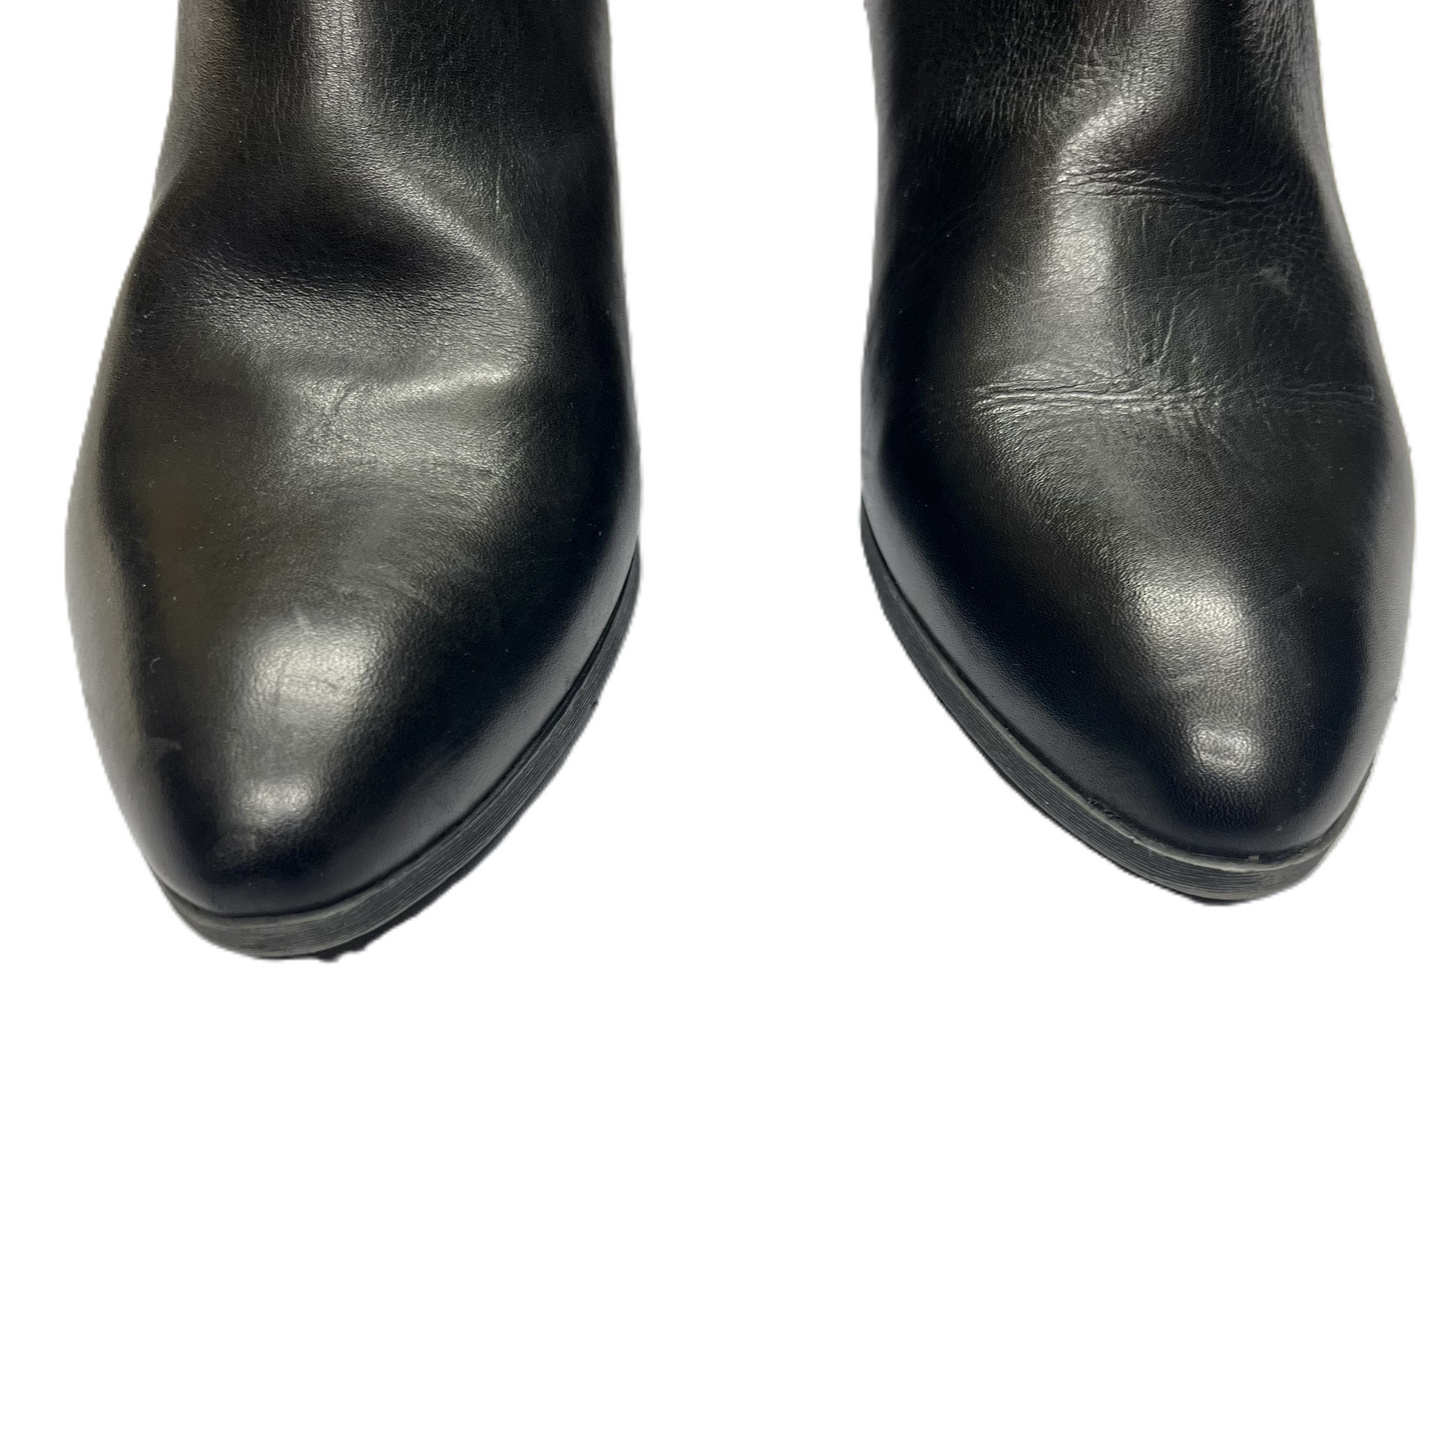 Black Boots Designer By Frye, Size: 9